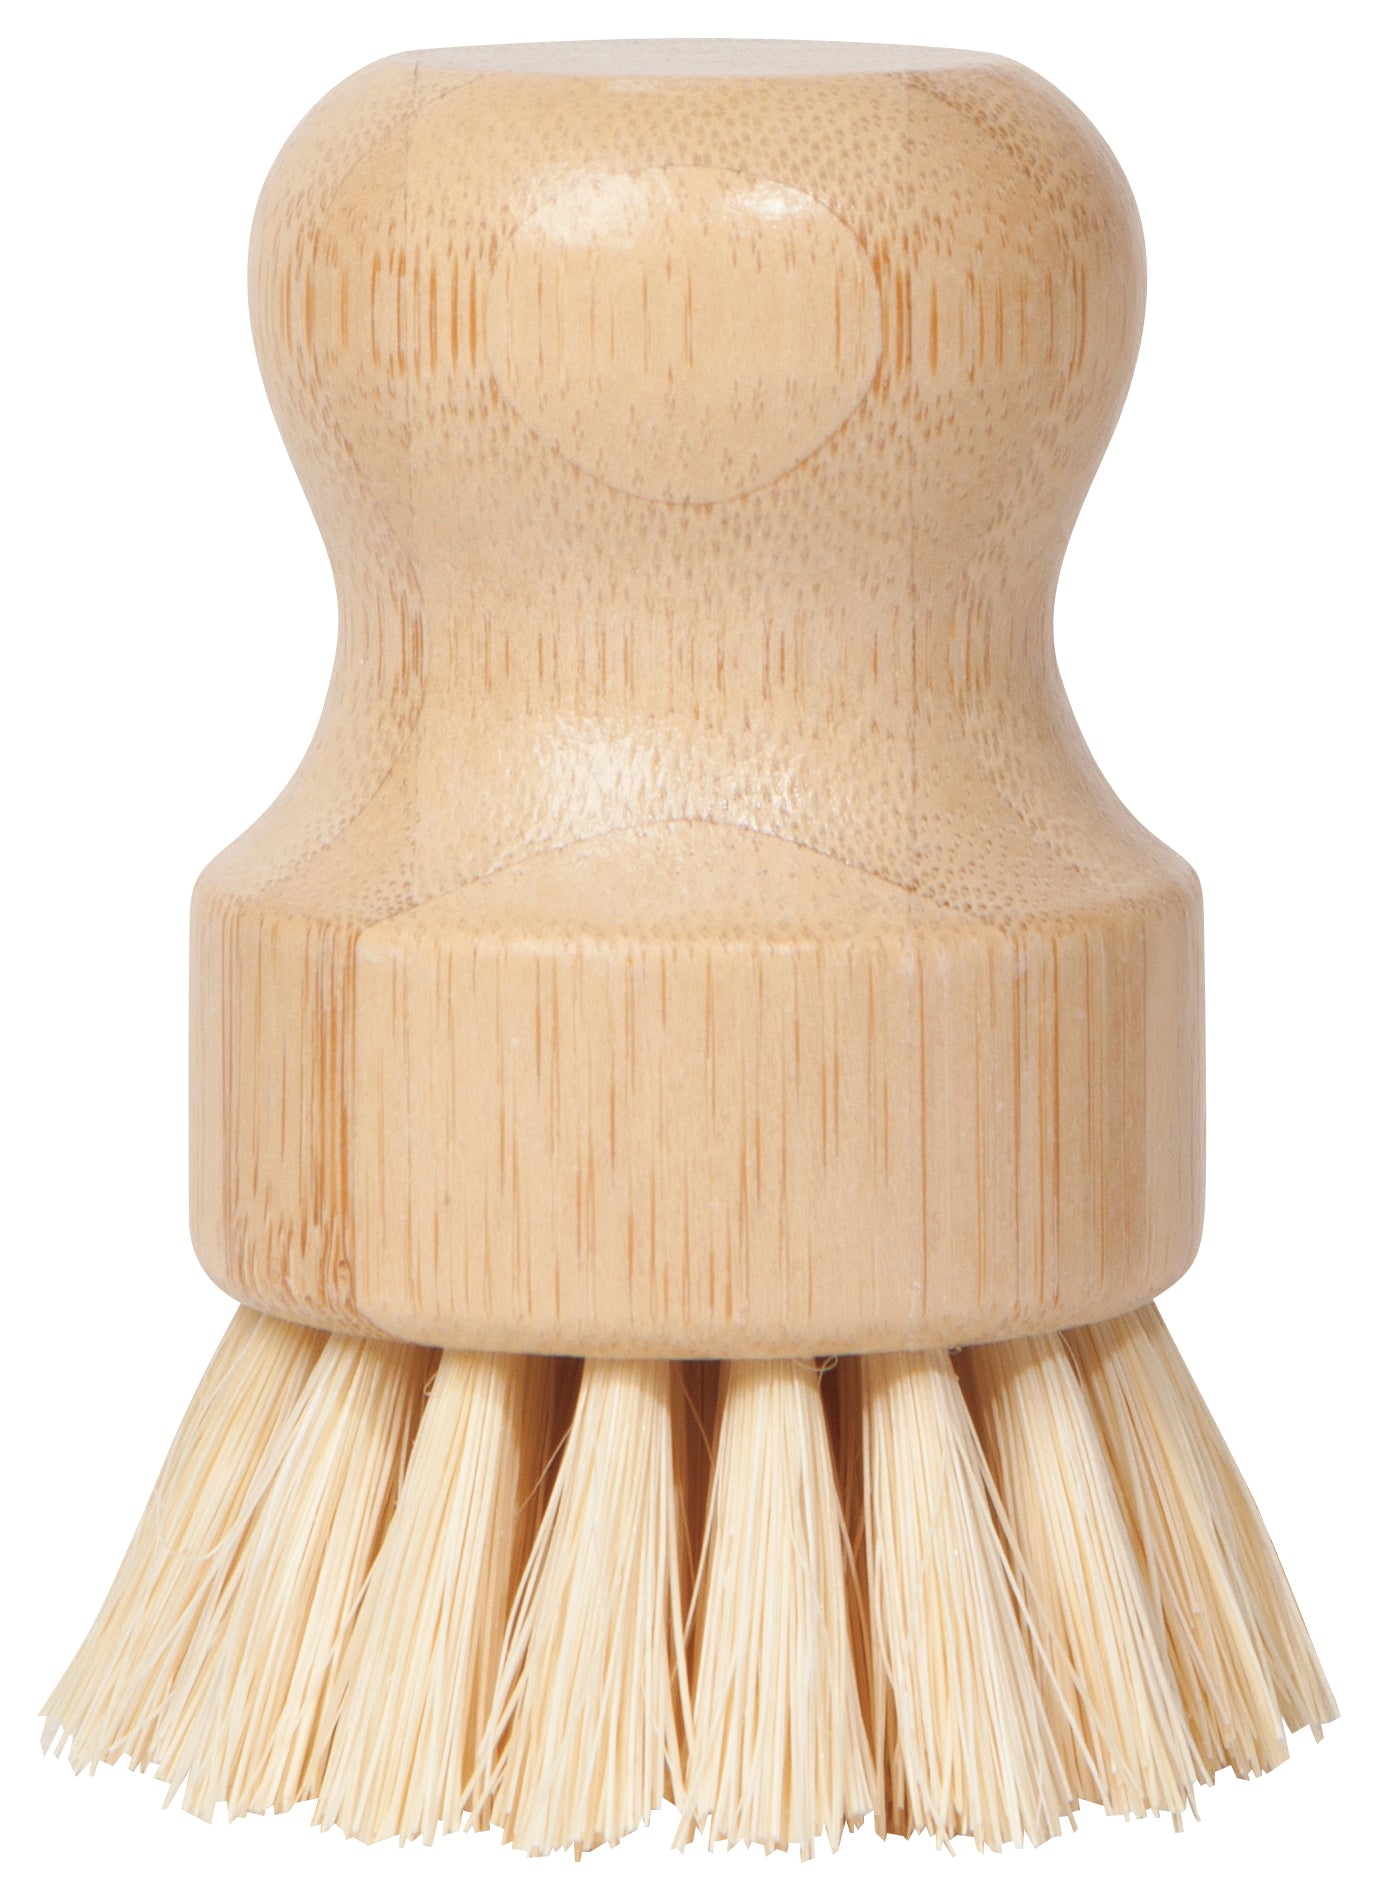 wooden handled scrub brush on a white background.